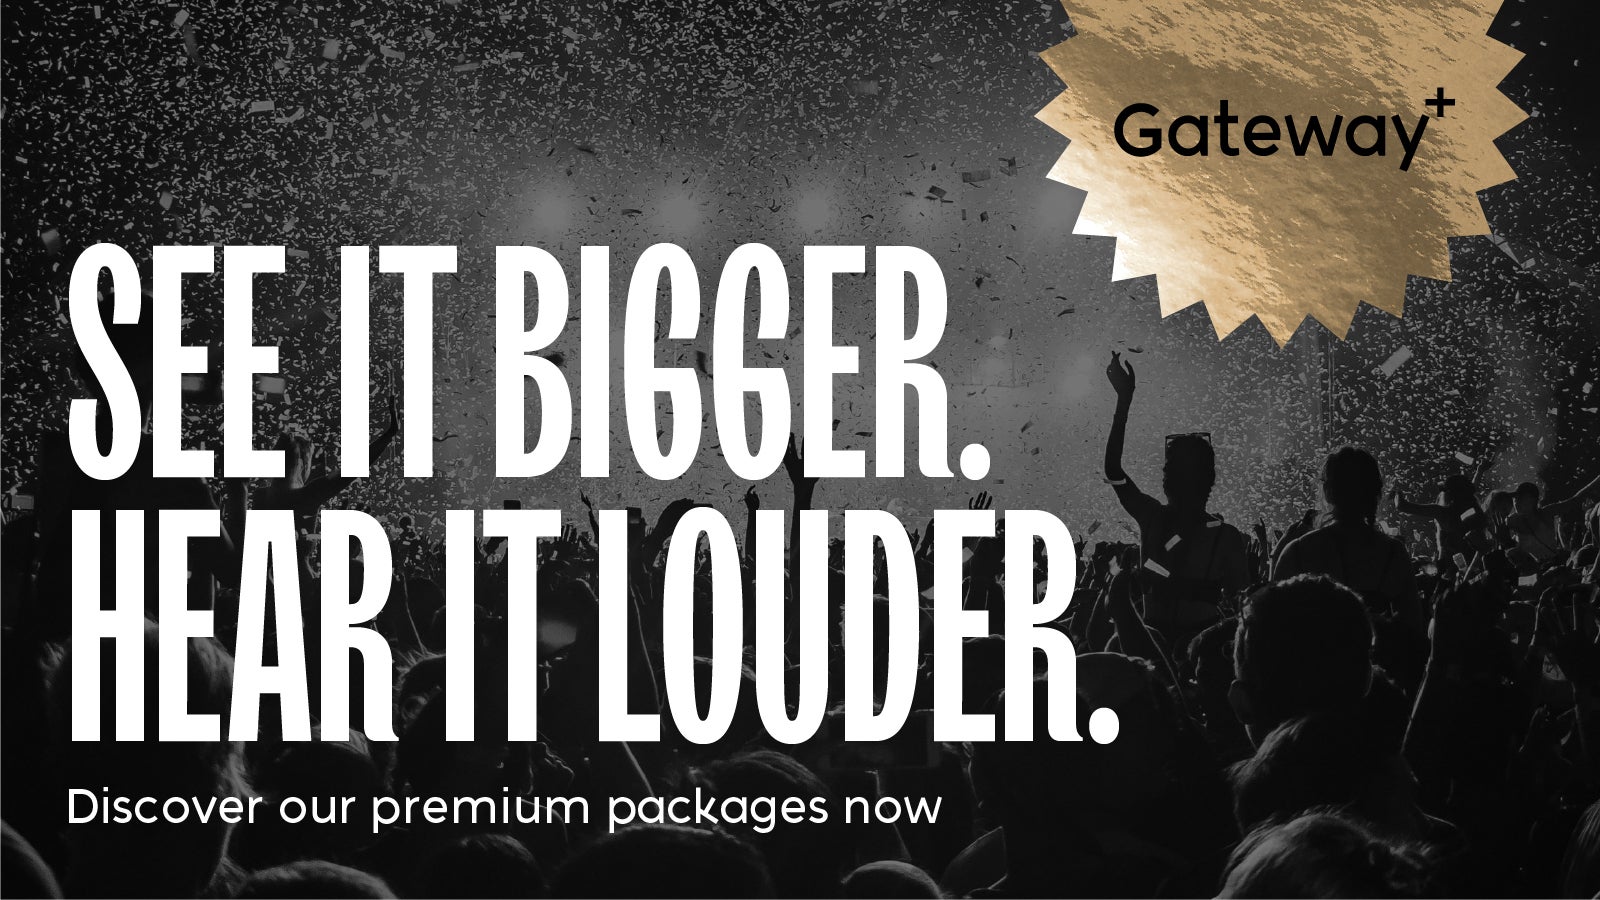 Scott Bradlee's Postmodern Jukebox - Premium Package - Gateway+ Event Title Pic